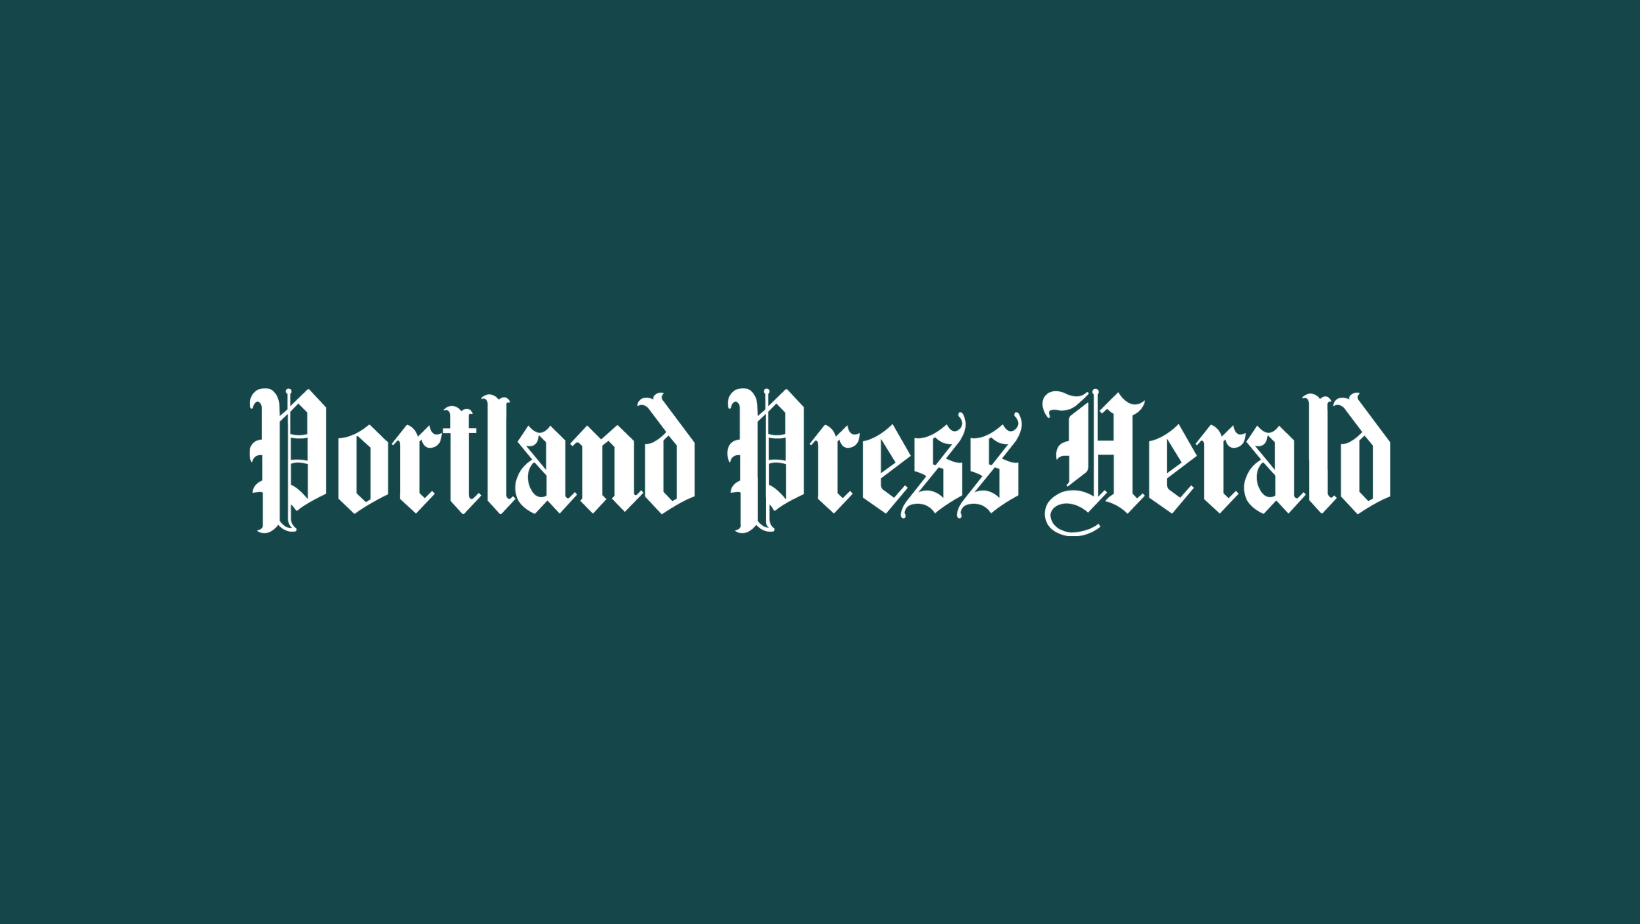 Press Page_Portland Press Herald